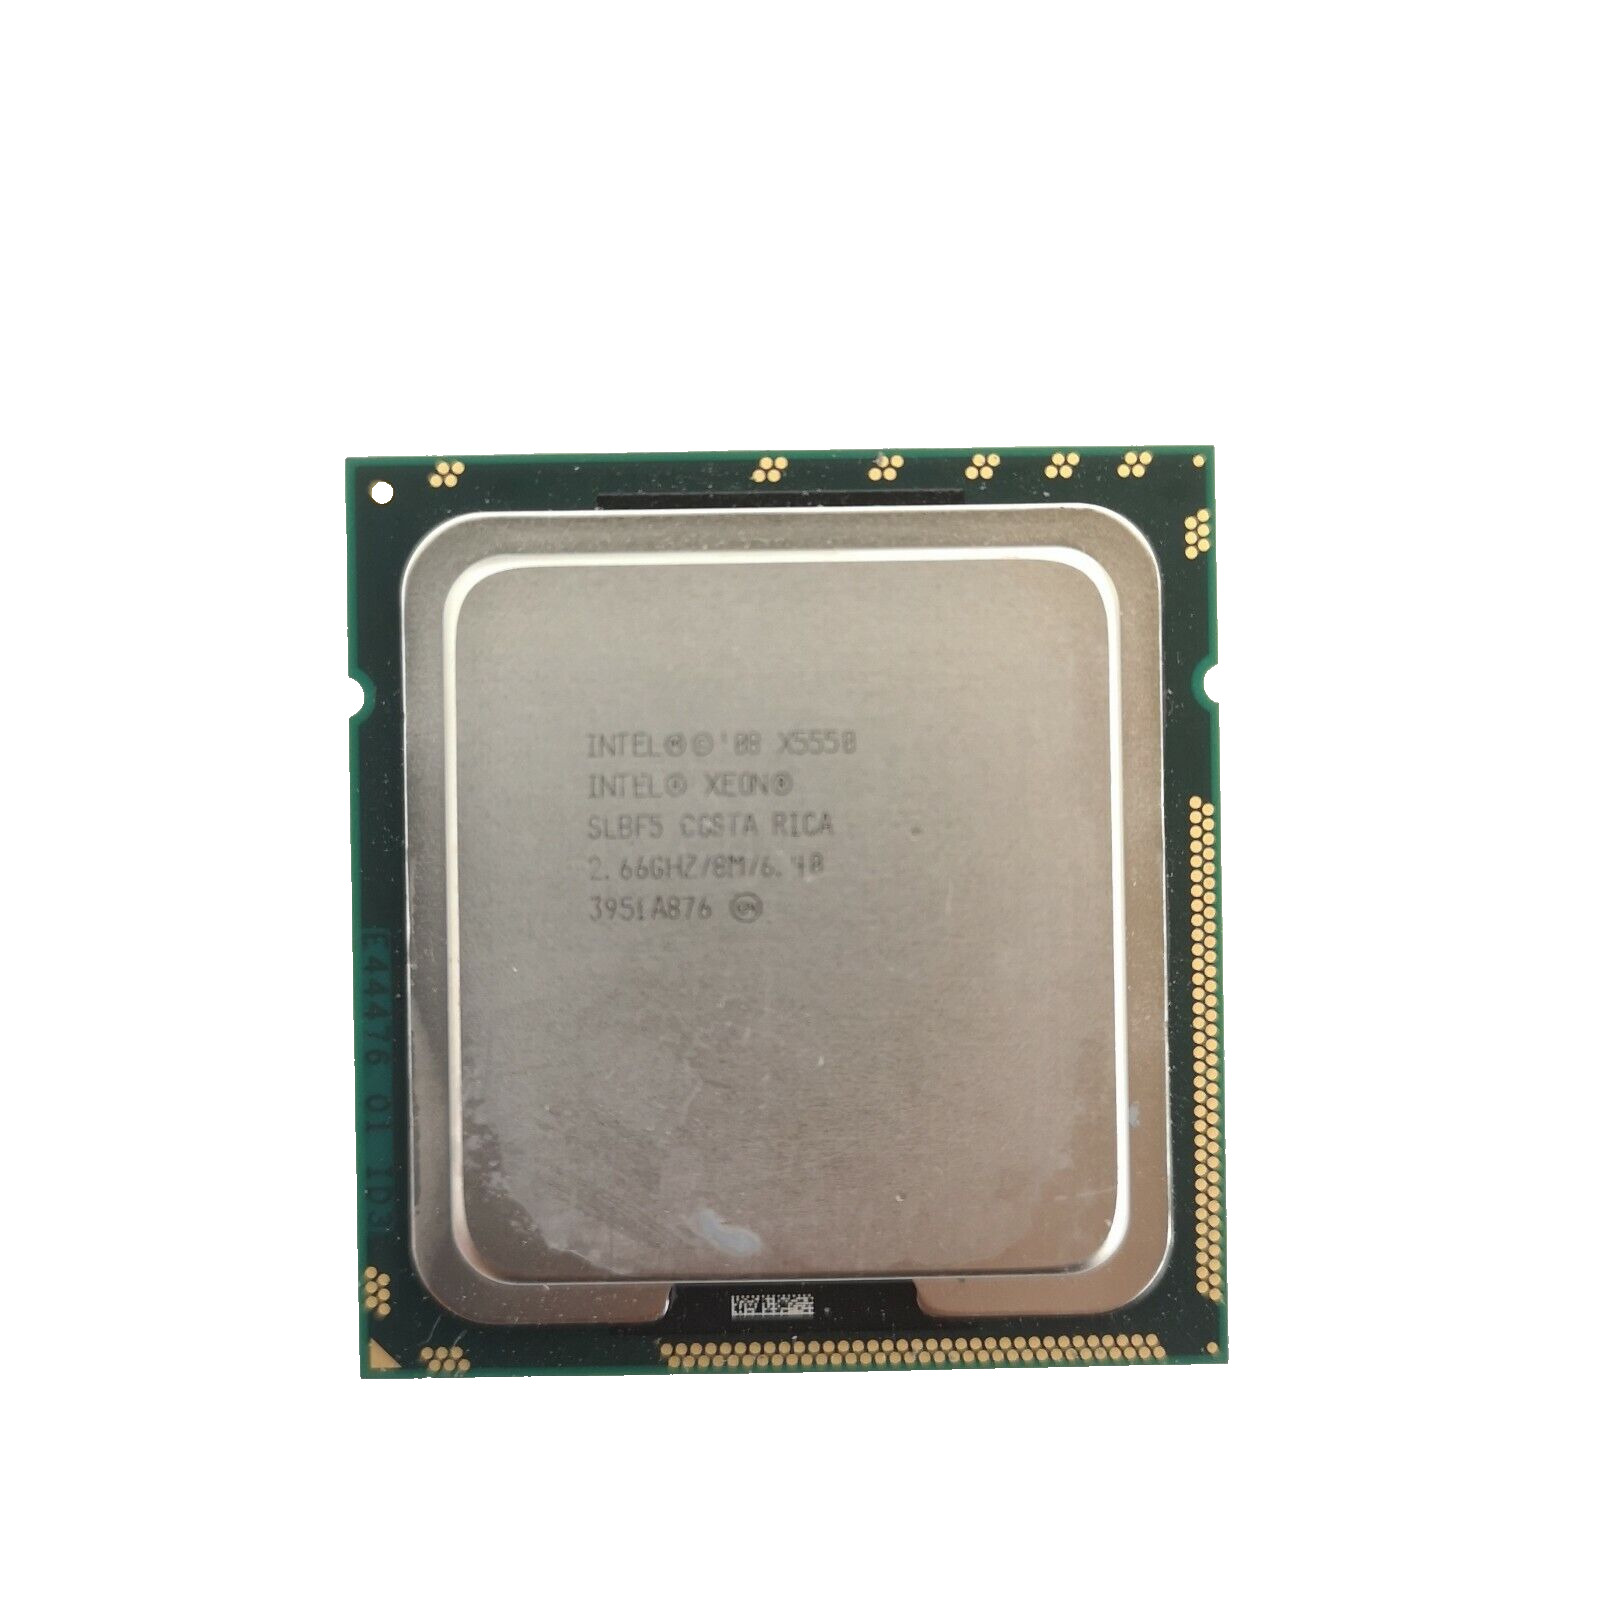 Lot of 16 Intel Xeon X5550 2.66GHz 